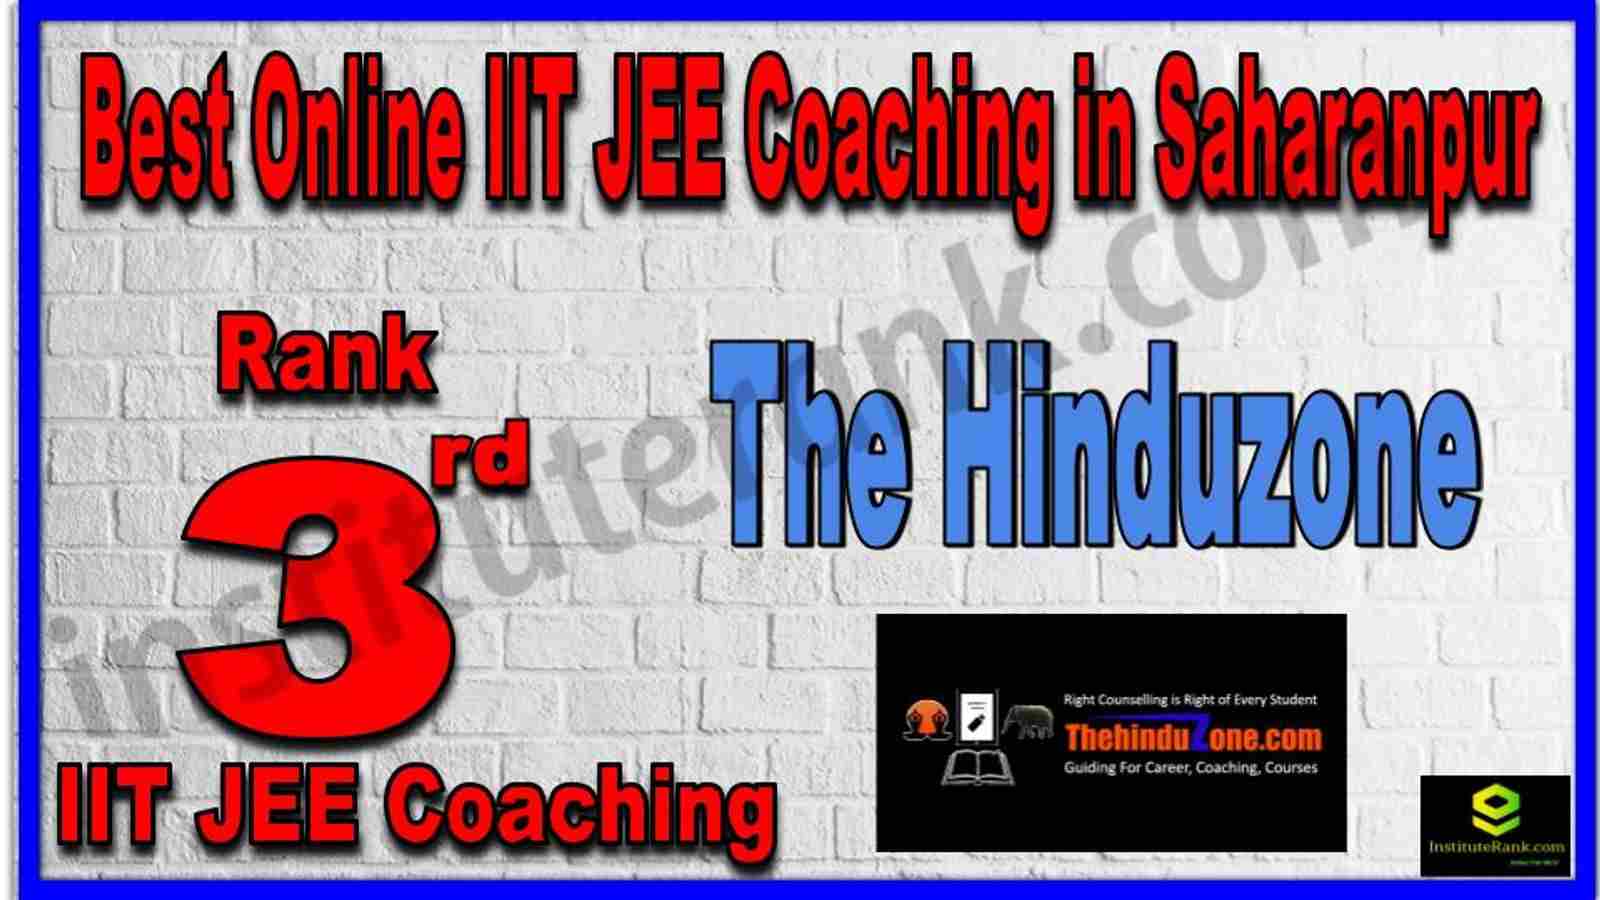 Rank 3rd Best Online IIT JEE Coaching in Saharanpur